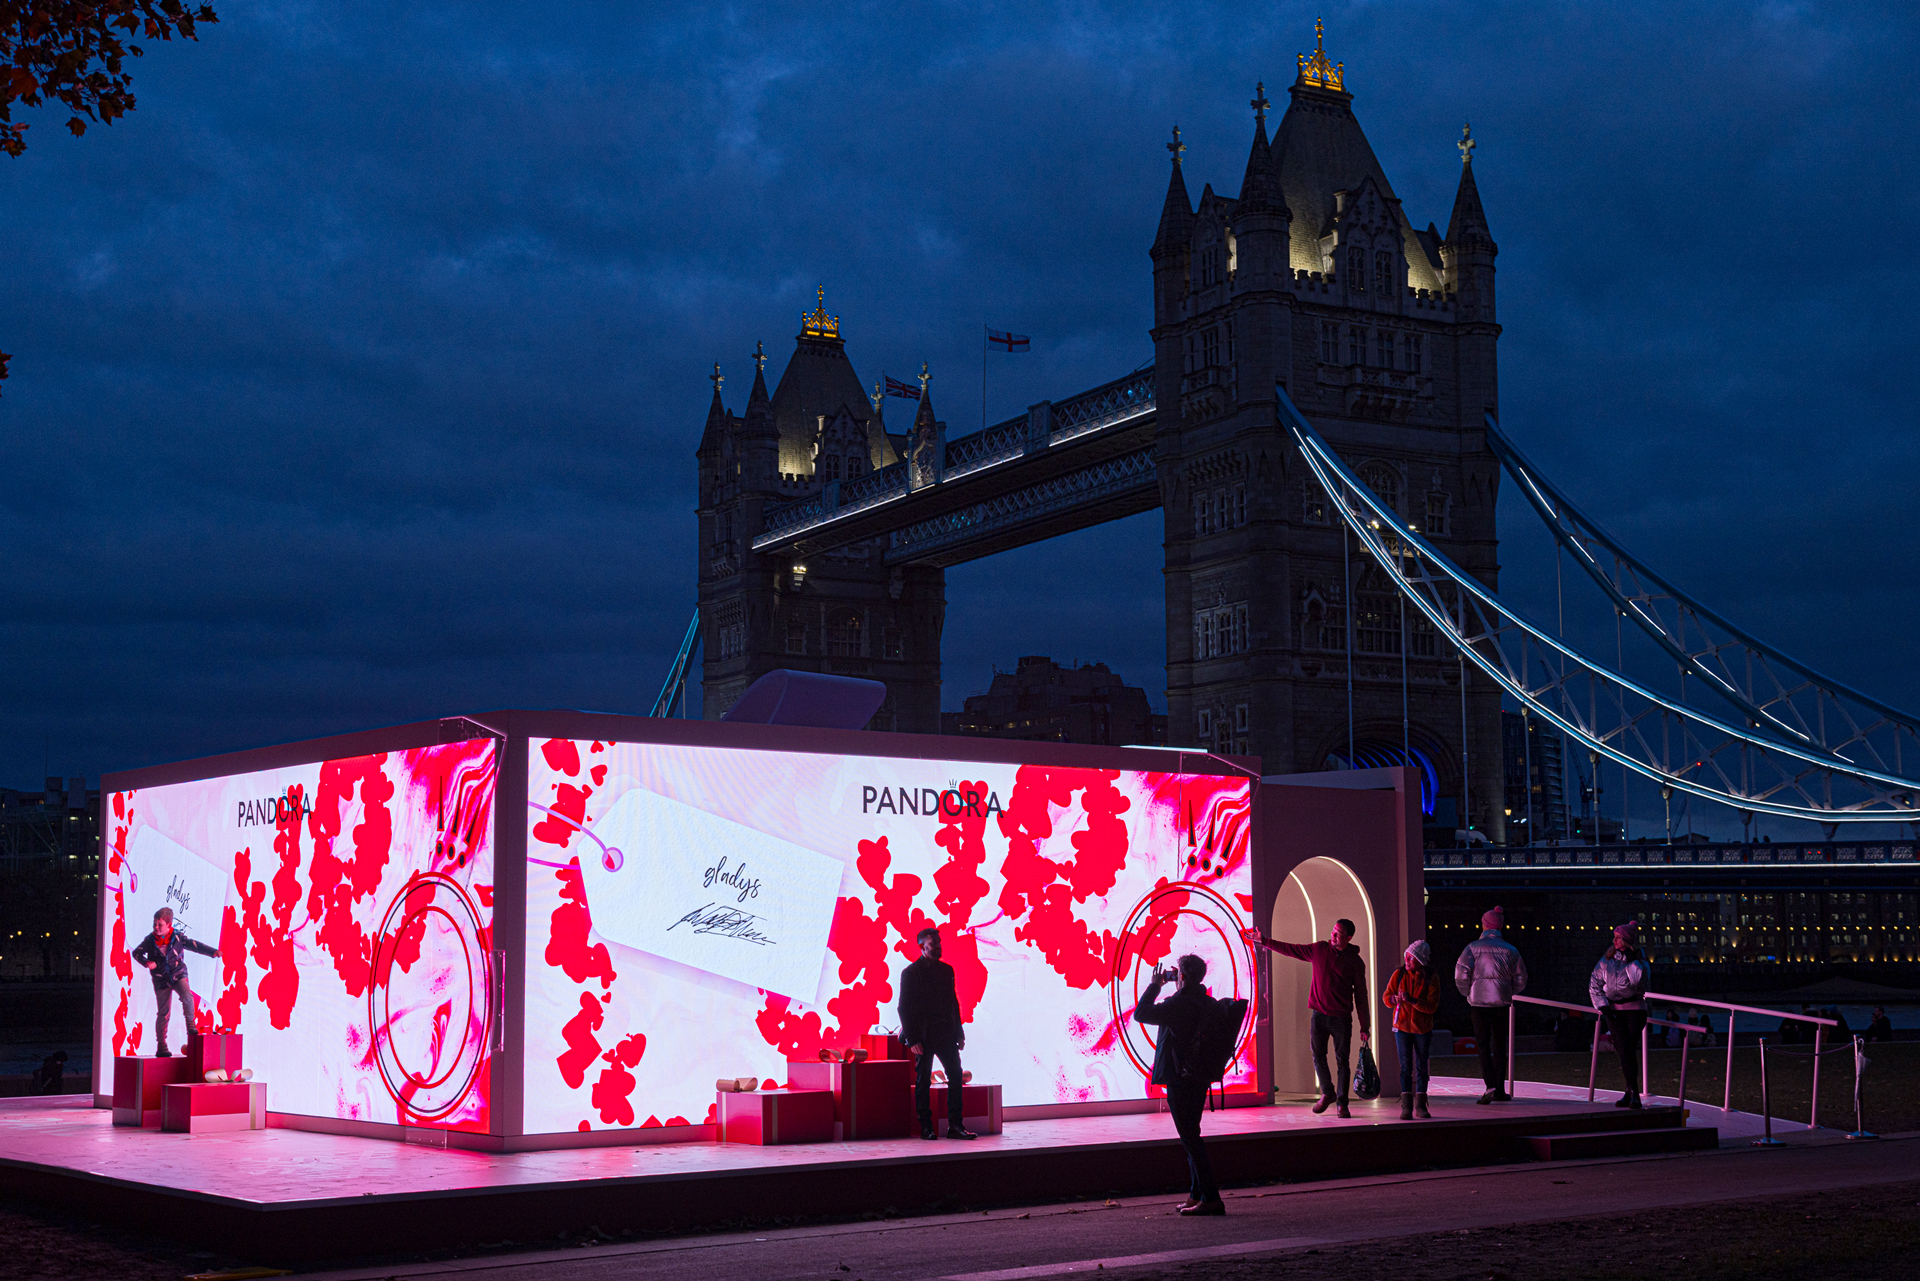 themed popup for Pandora, by London Bridge